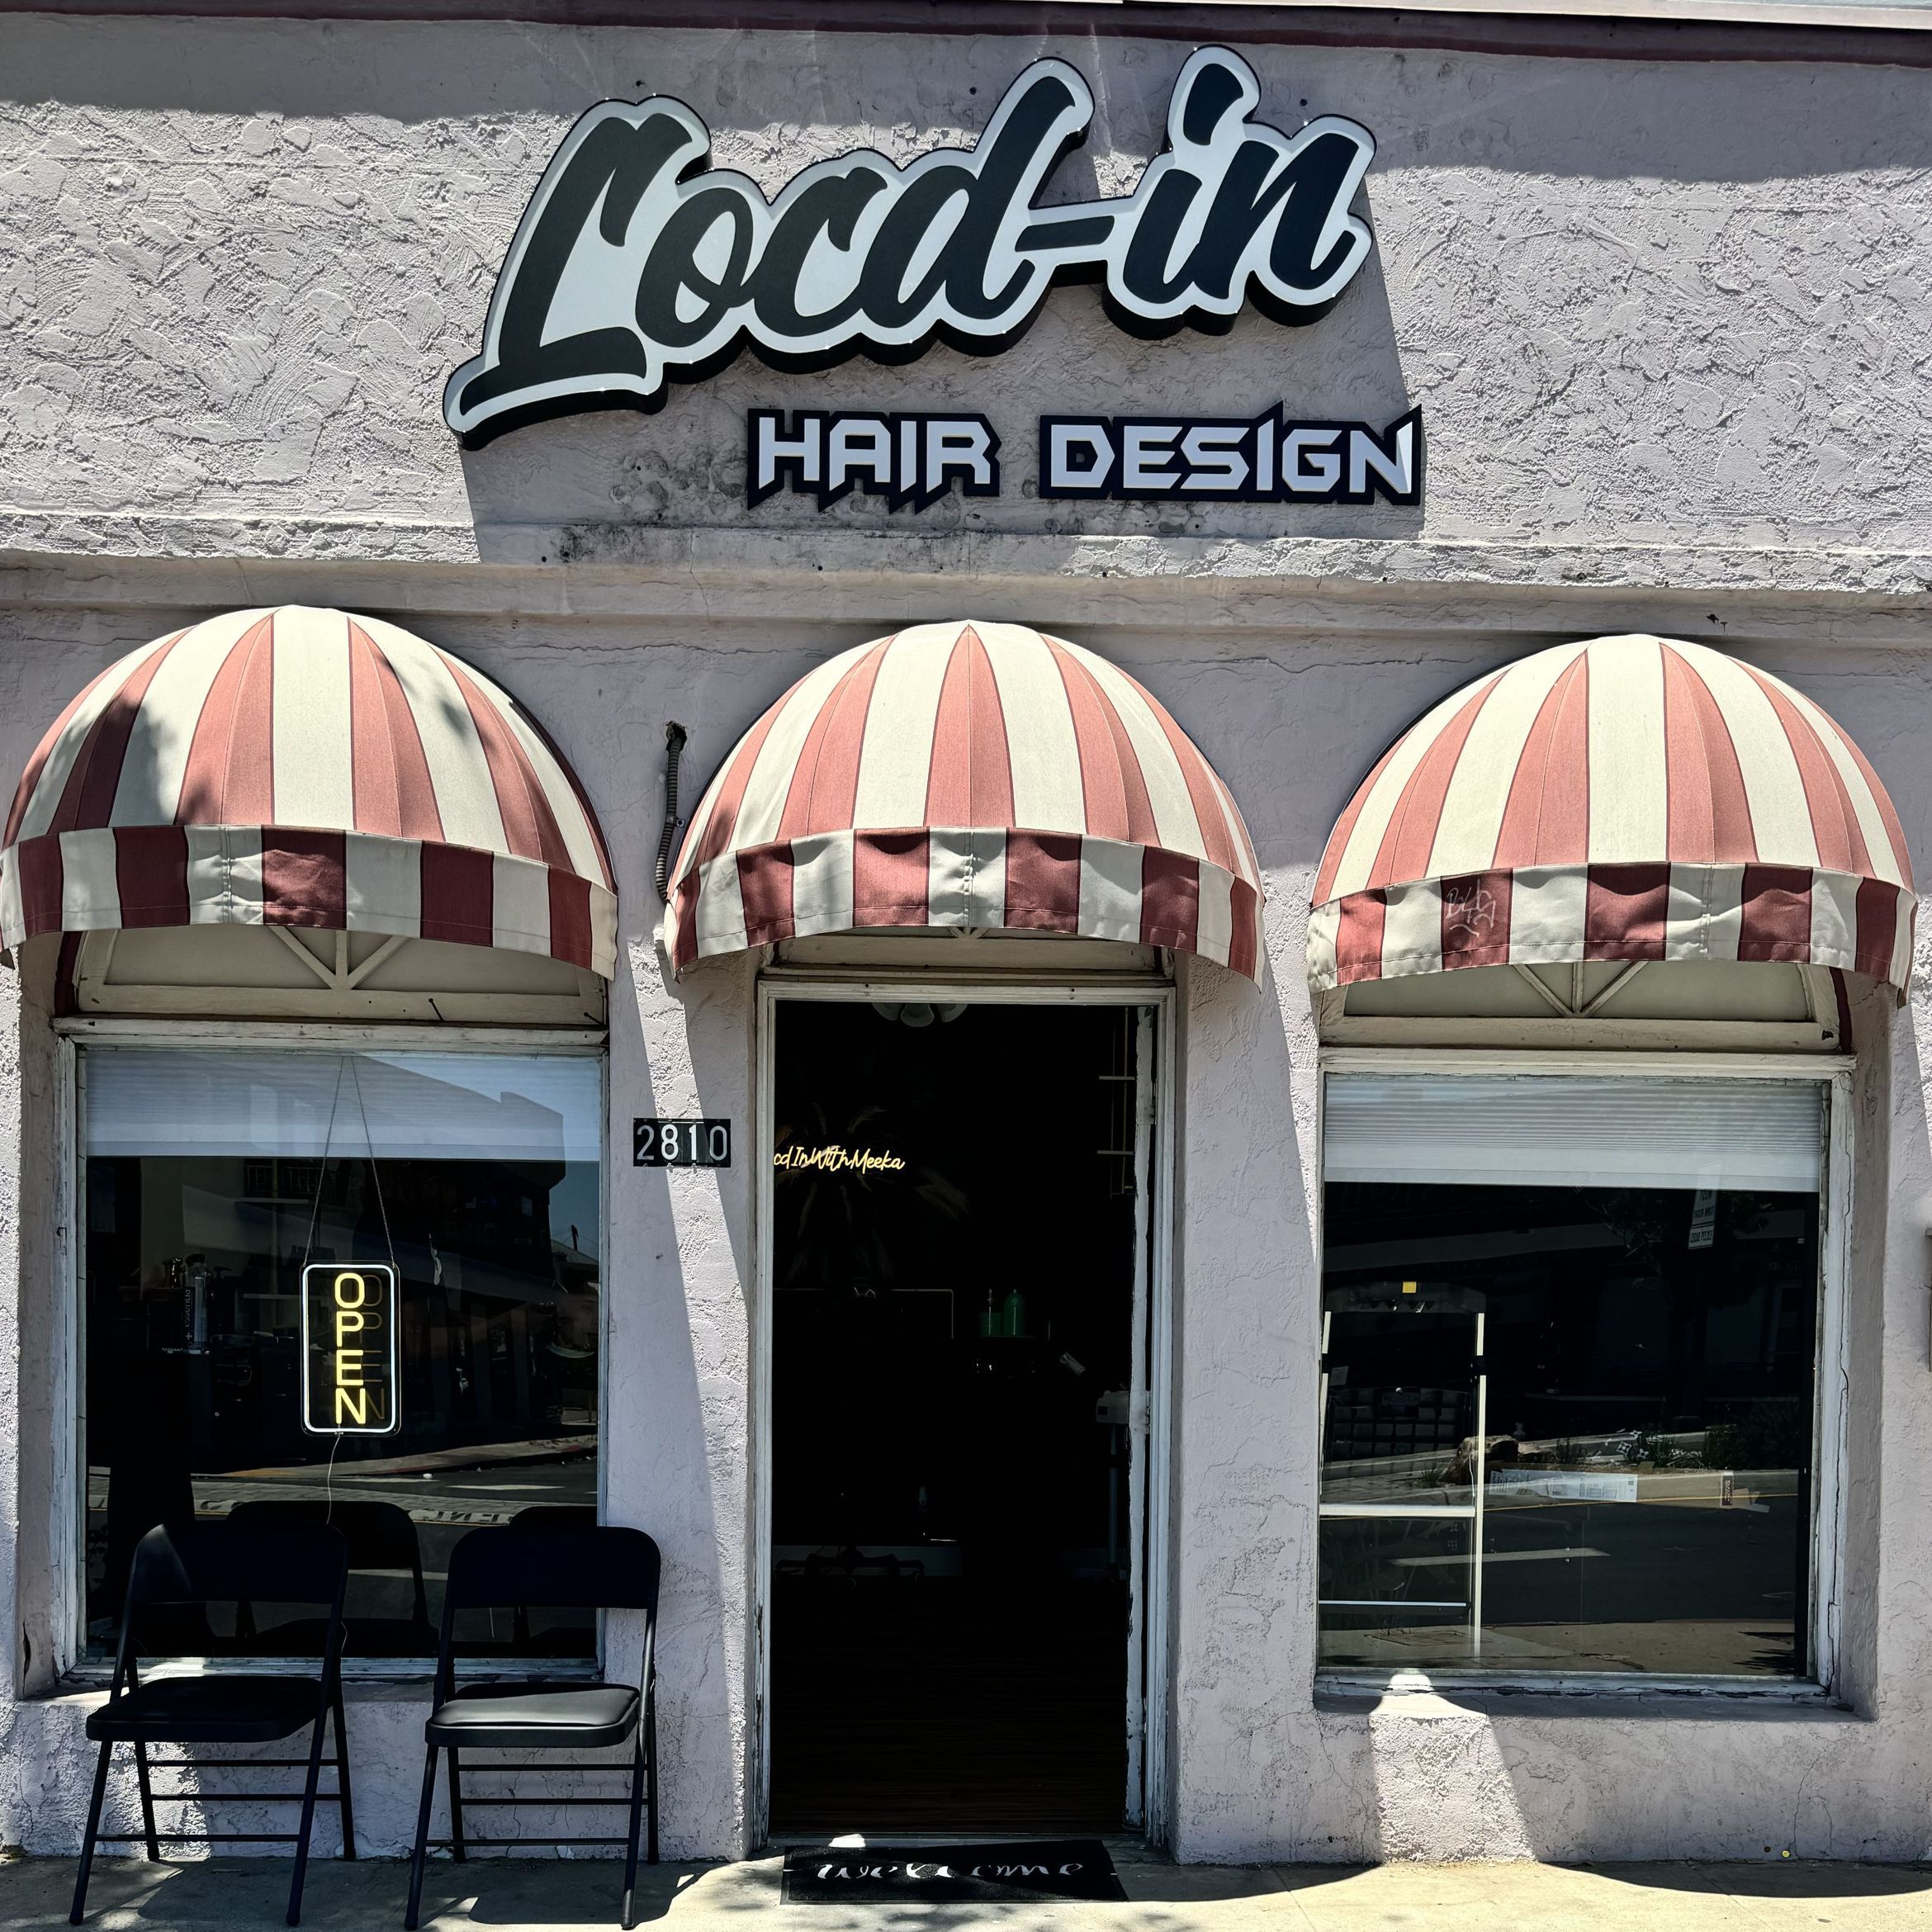 Loc’d In Hair Design, 2810 University Ave, San Diego, 92104